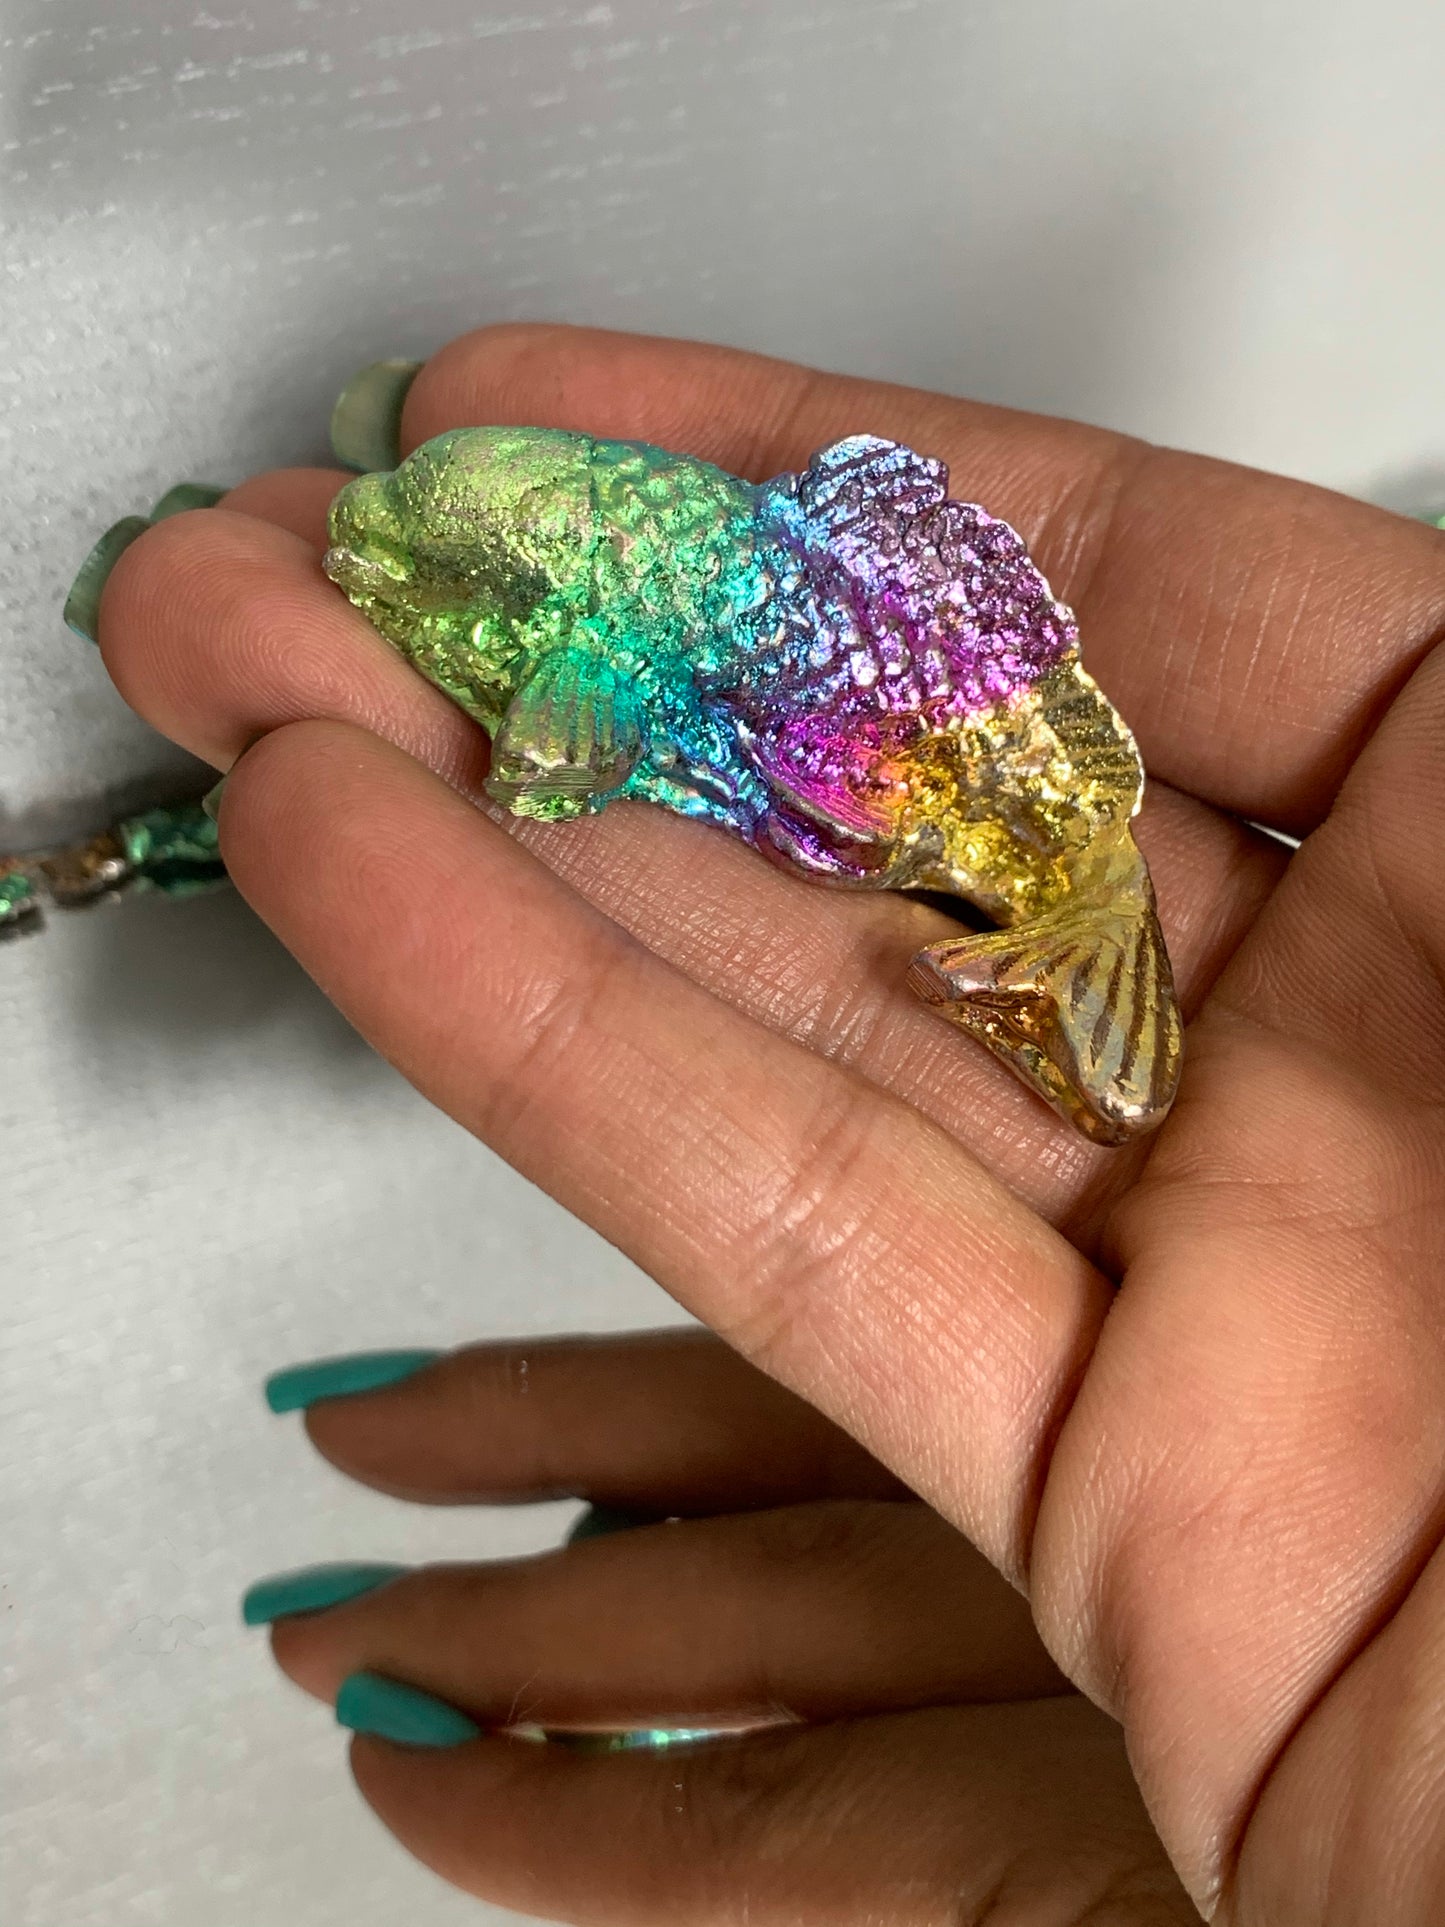 Rainbow Bismuth Crystal Small Kio Fish Metal Art Sculpture